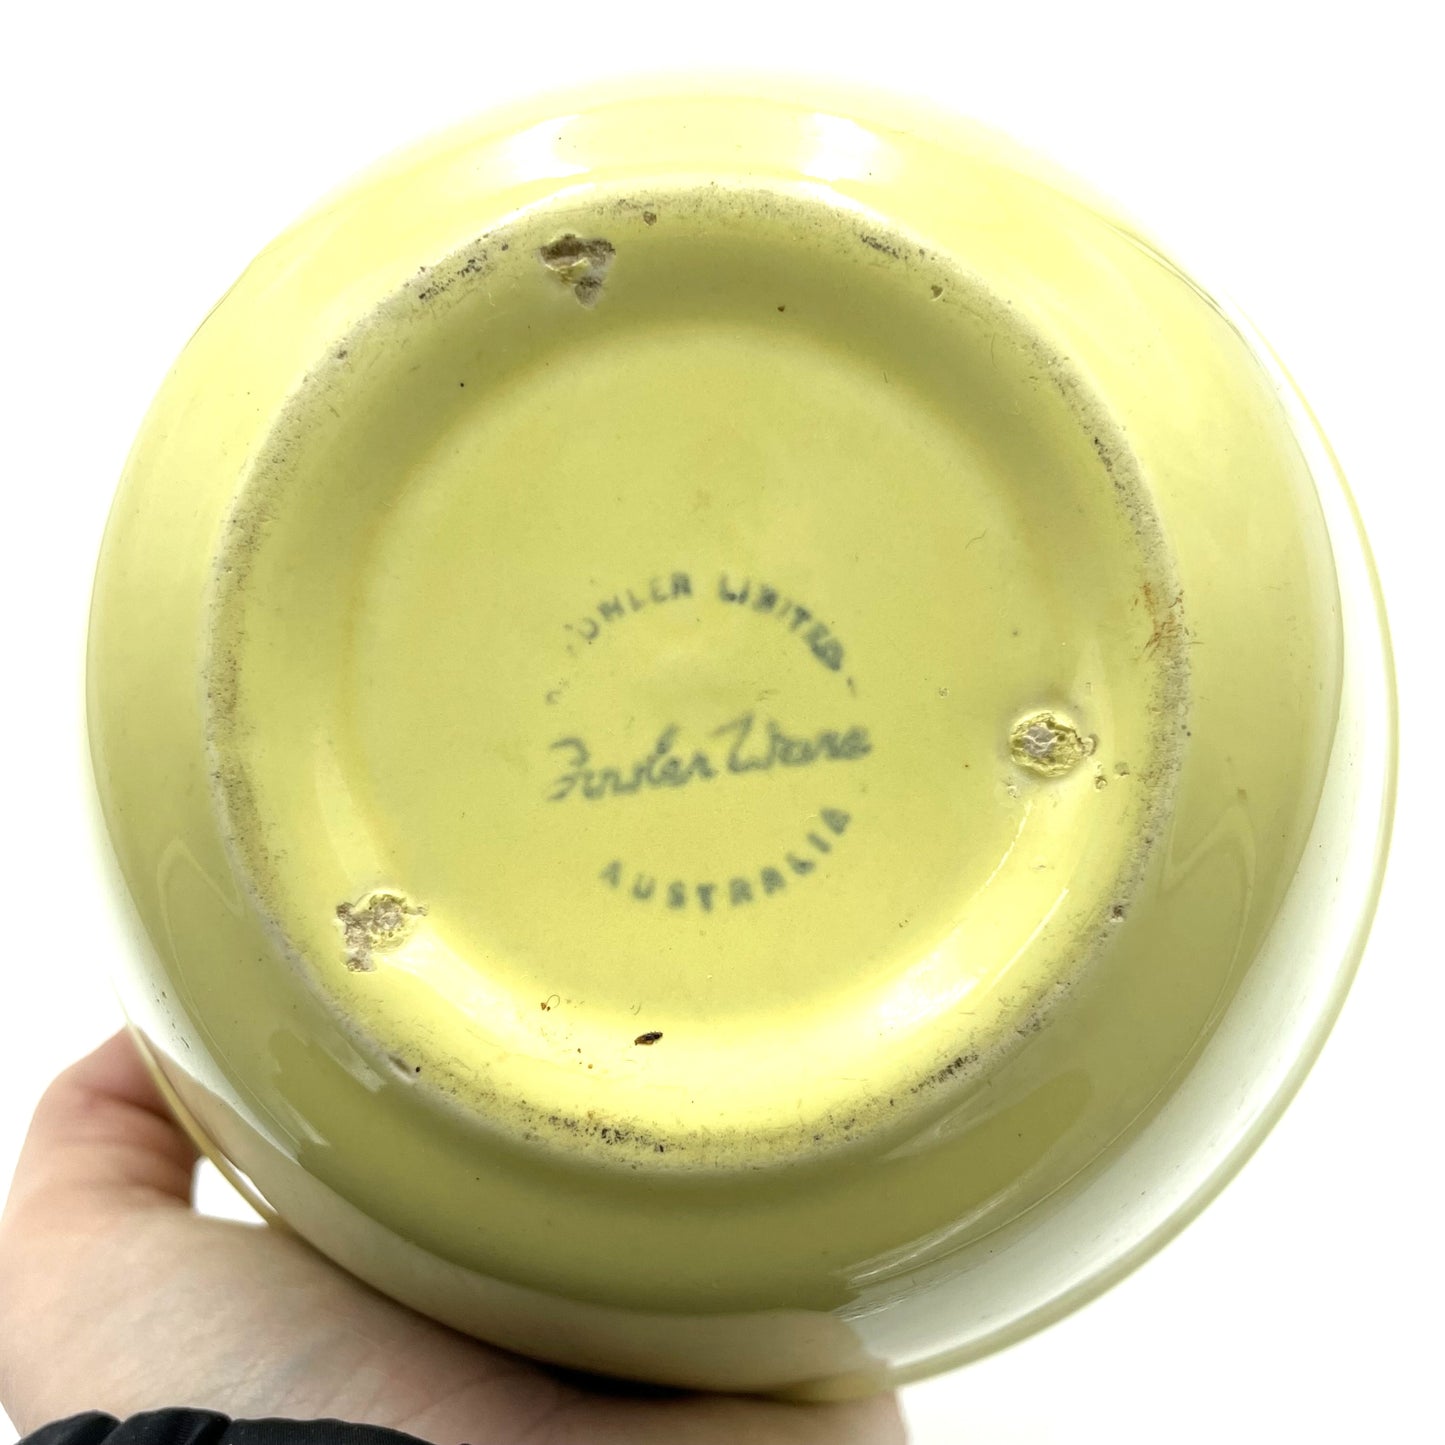 Yellow Fowler Ware Bowl - 15.5cm